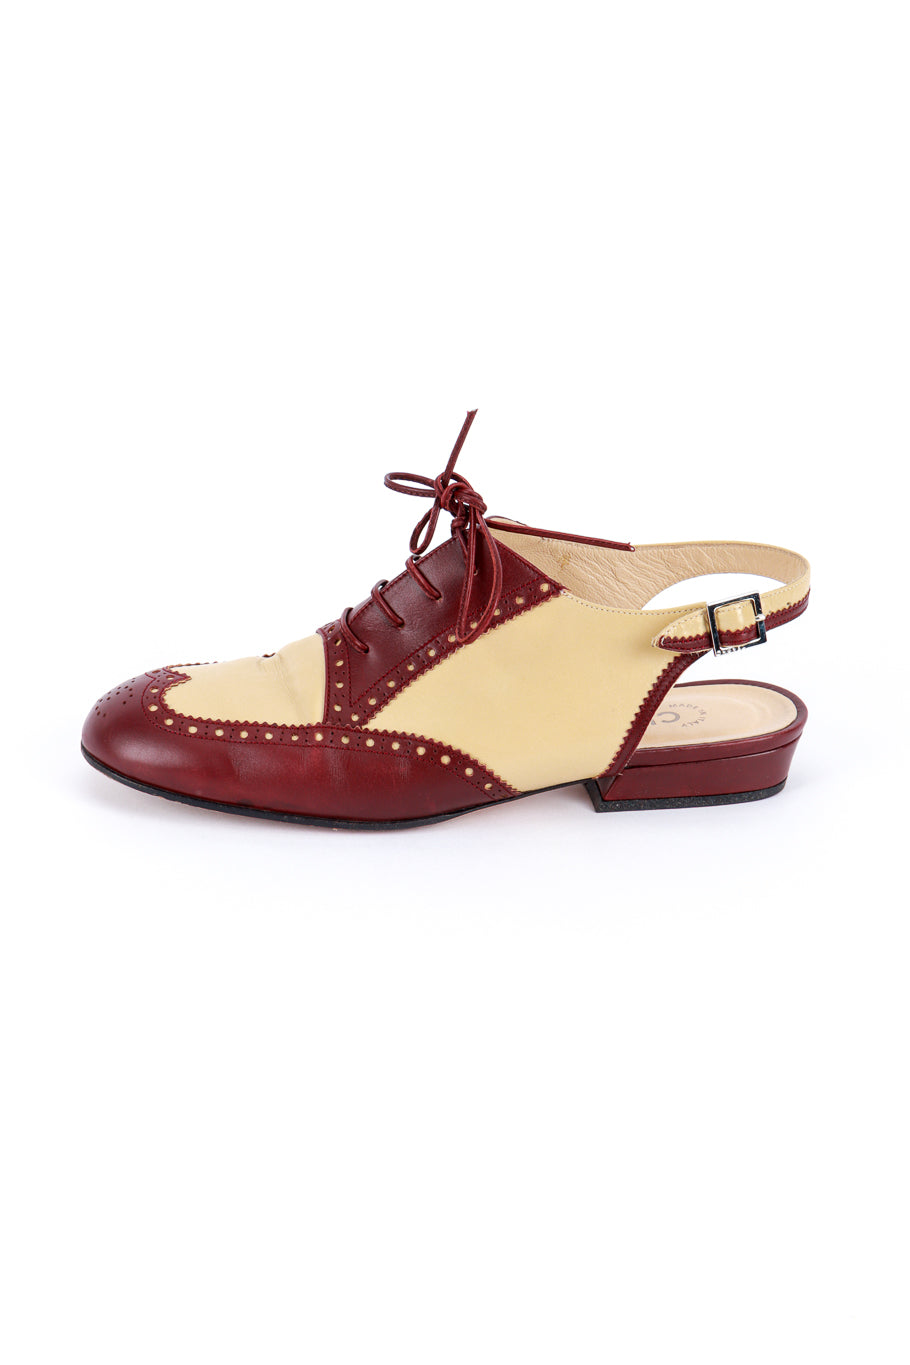 Vintage Chanel Two-Tone Slingback Brogues left shoe outer side @recess la